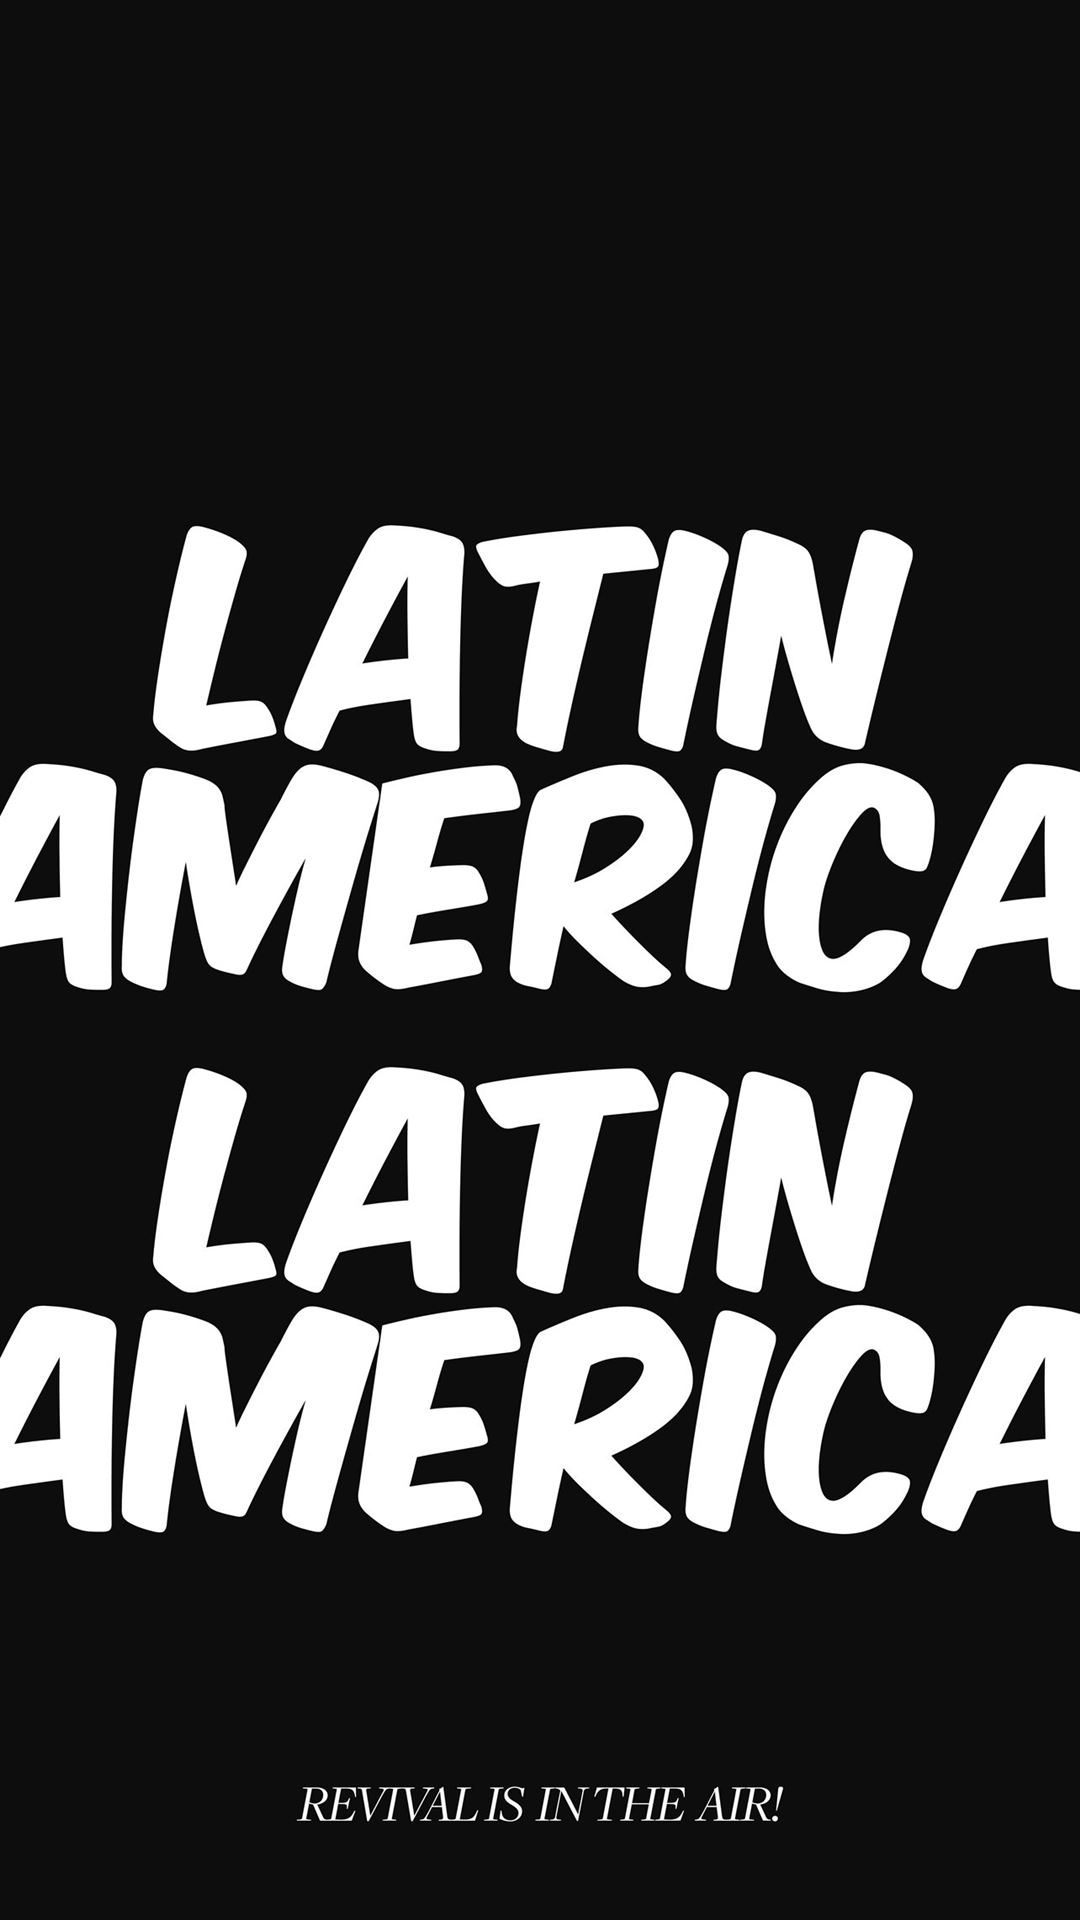 Latin American Music Wallpapers